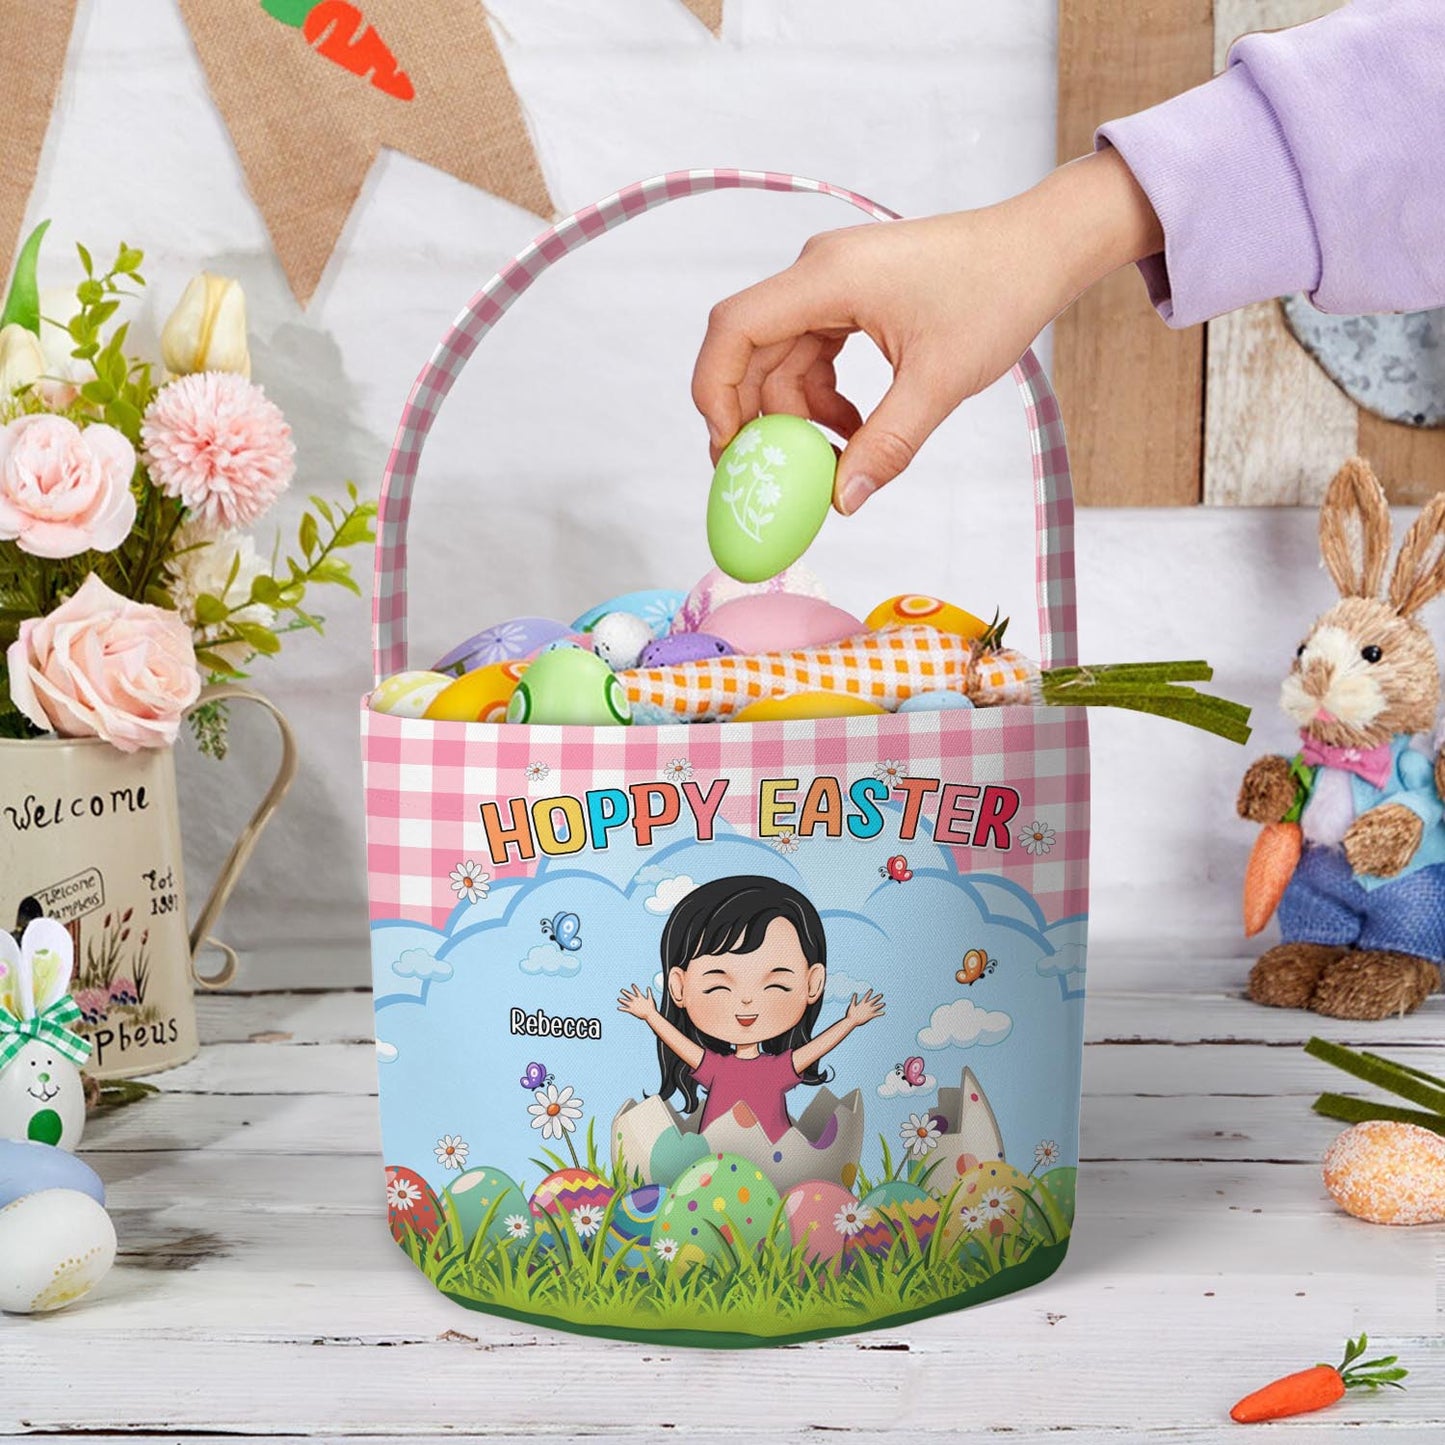 Hoppy Easter Gift For Kids - Personalized Easter Basket